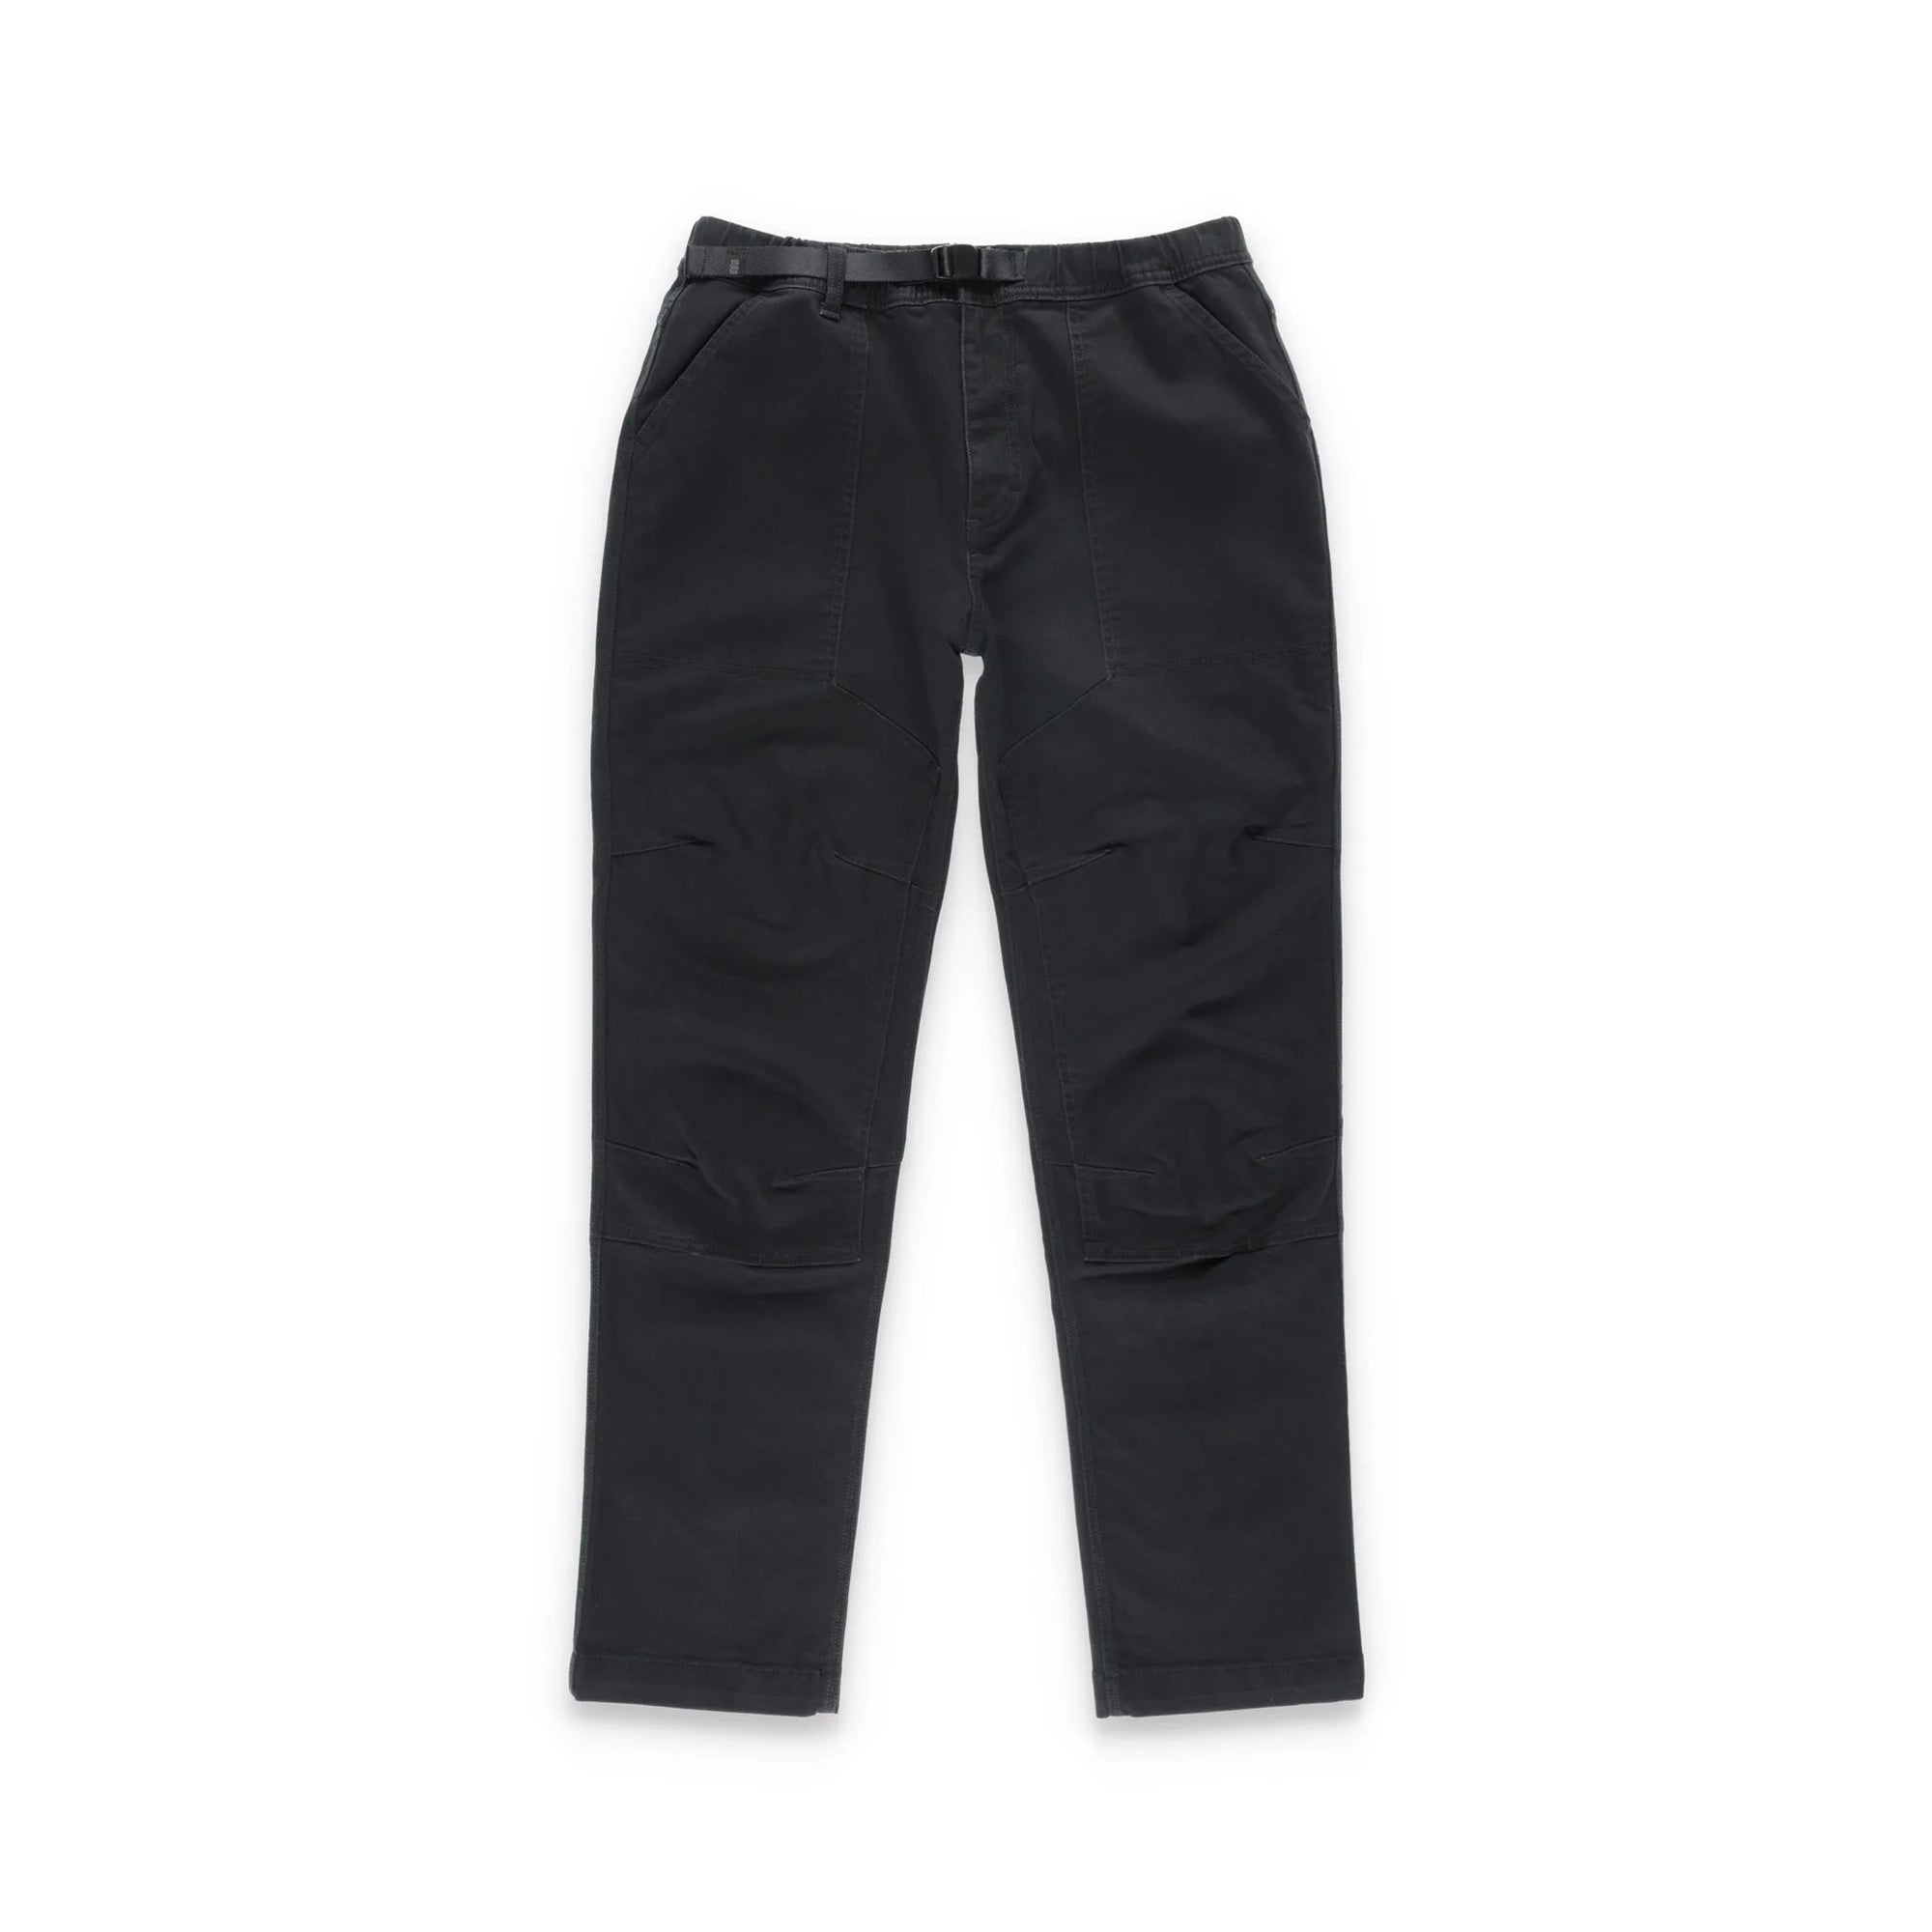 Topo Designs Mountain Pant Ripstop Black Pants Topo Designs 